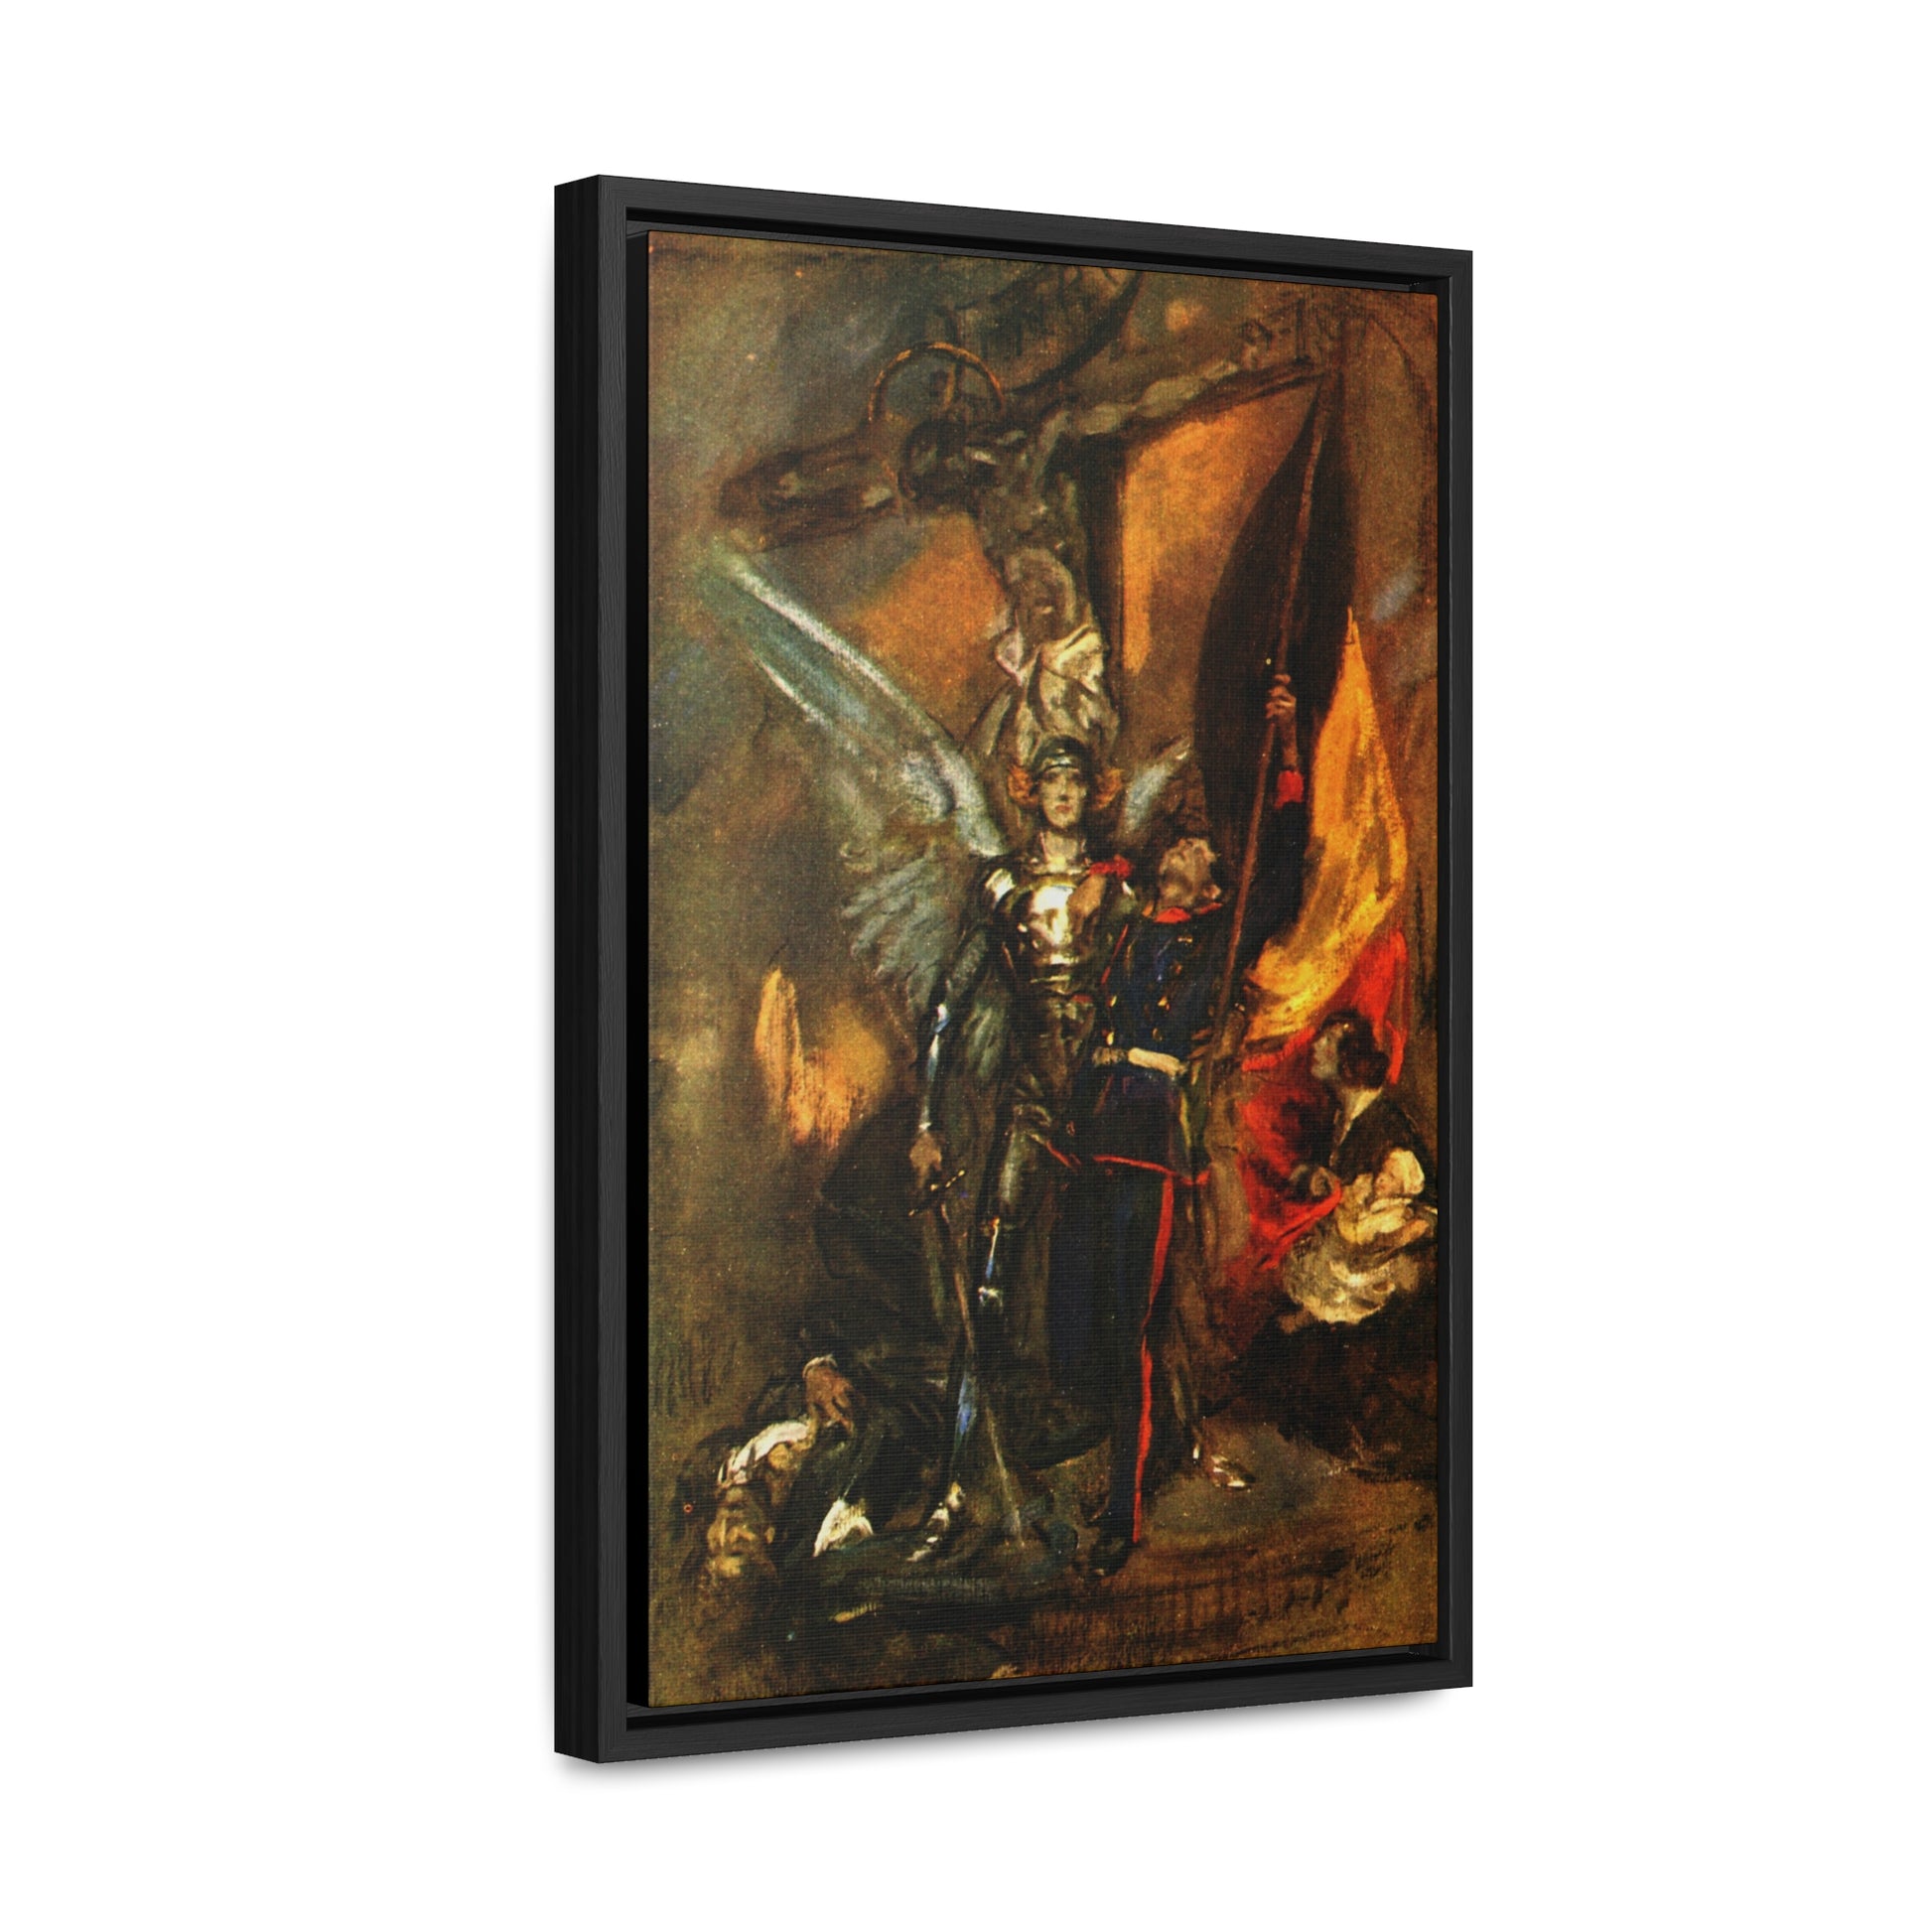 St. Michael of Belgium Framed Canvas - Sanctus Art Gallery